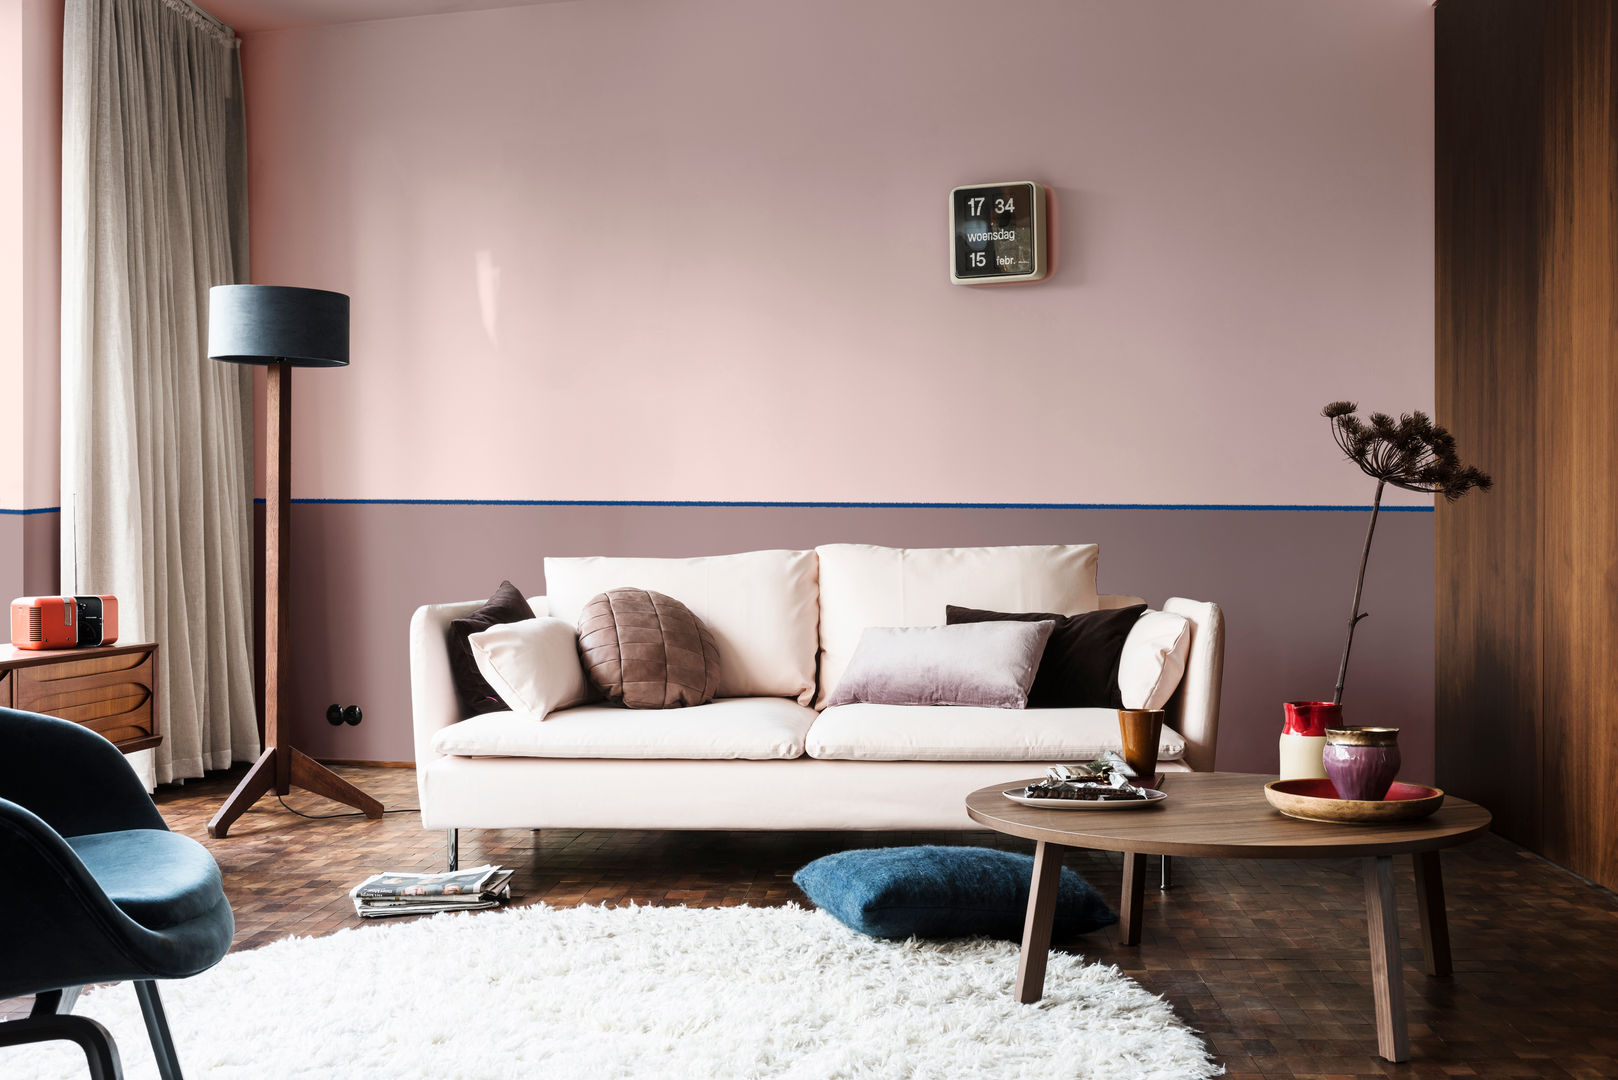 The Heart Wood Home Dulux UK Phòng khách phong cách Bắc Âu pink,living room,lounge,heartwood,heart wood,paint,dulux,purple,colour of the year,relaxed,scandinavian,tonal